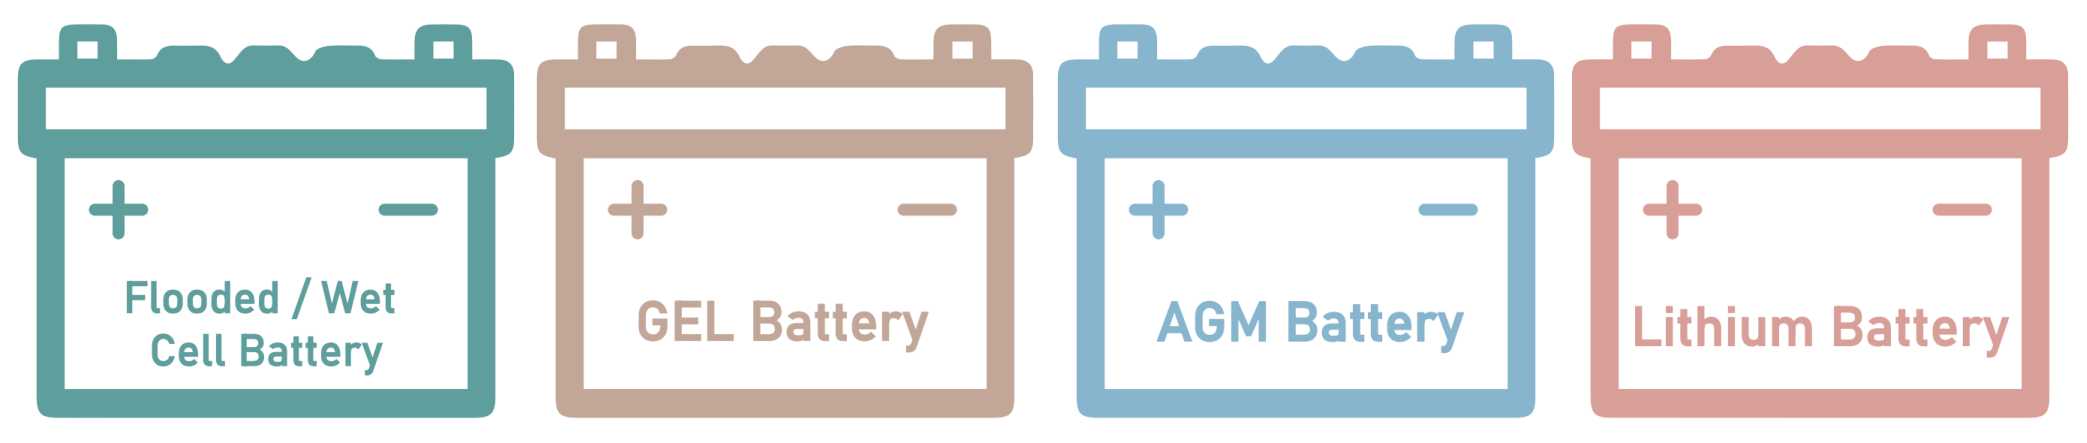 bateria para lavadora de piso AGM Lithium